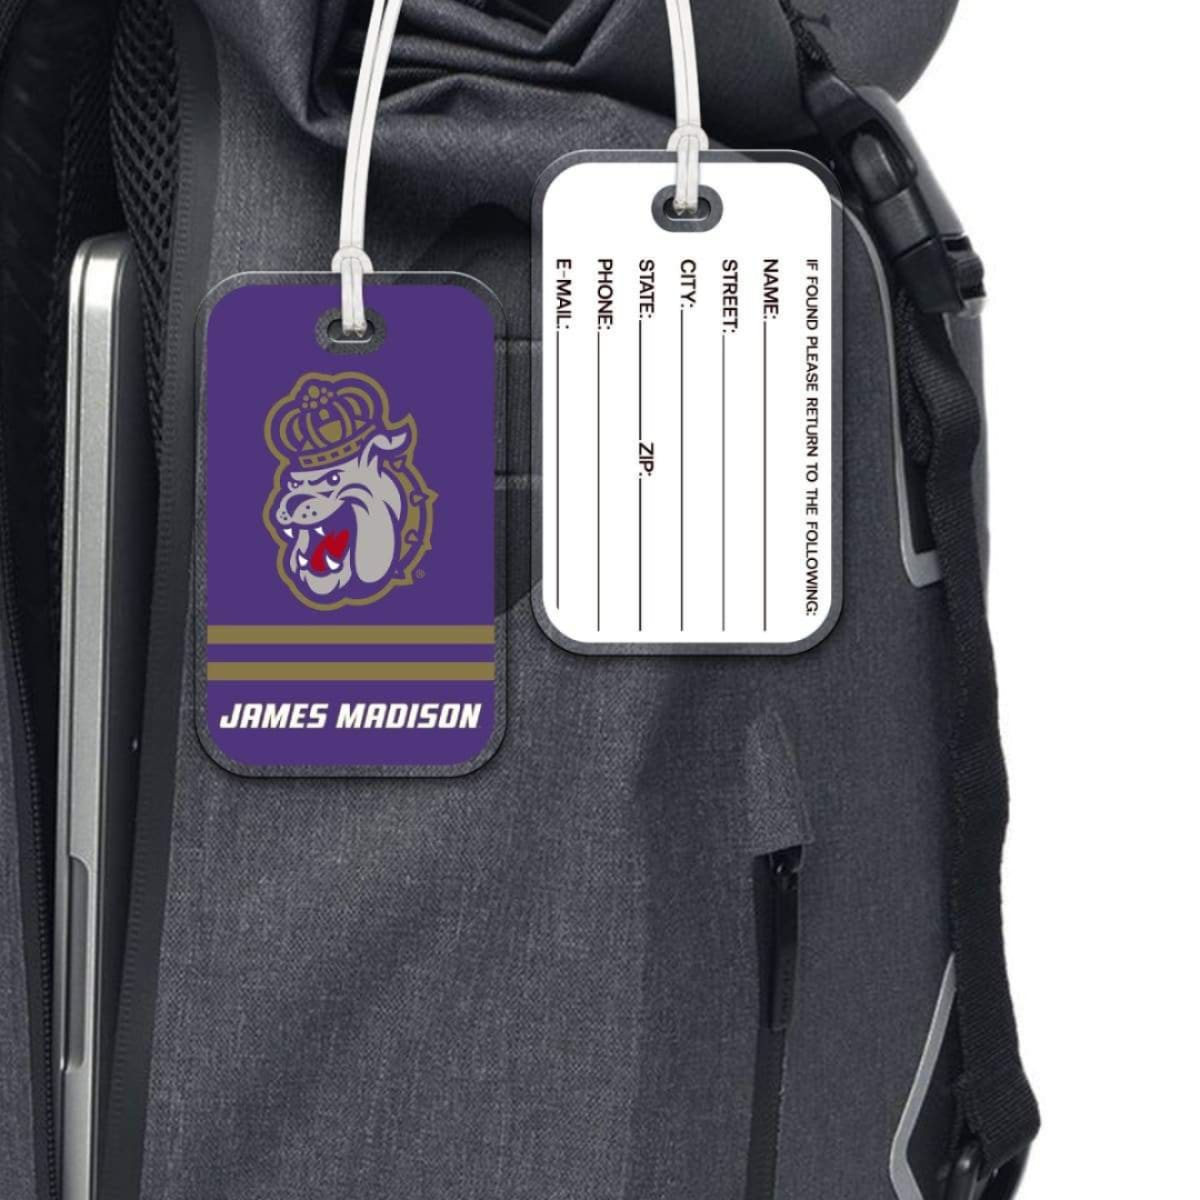 JMU Bag Tags - All Designs IN STOCK - Duke Dog w/ gold